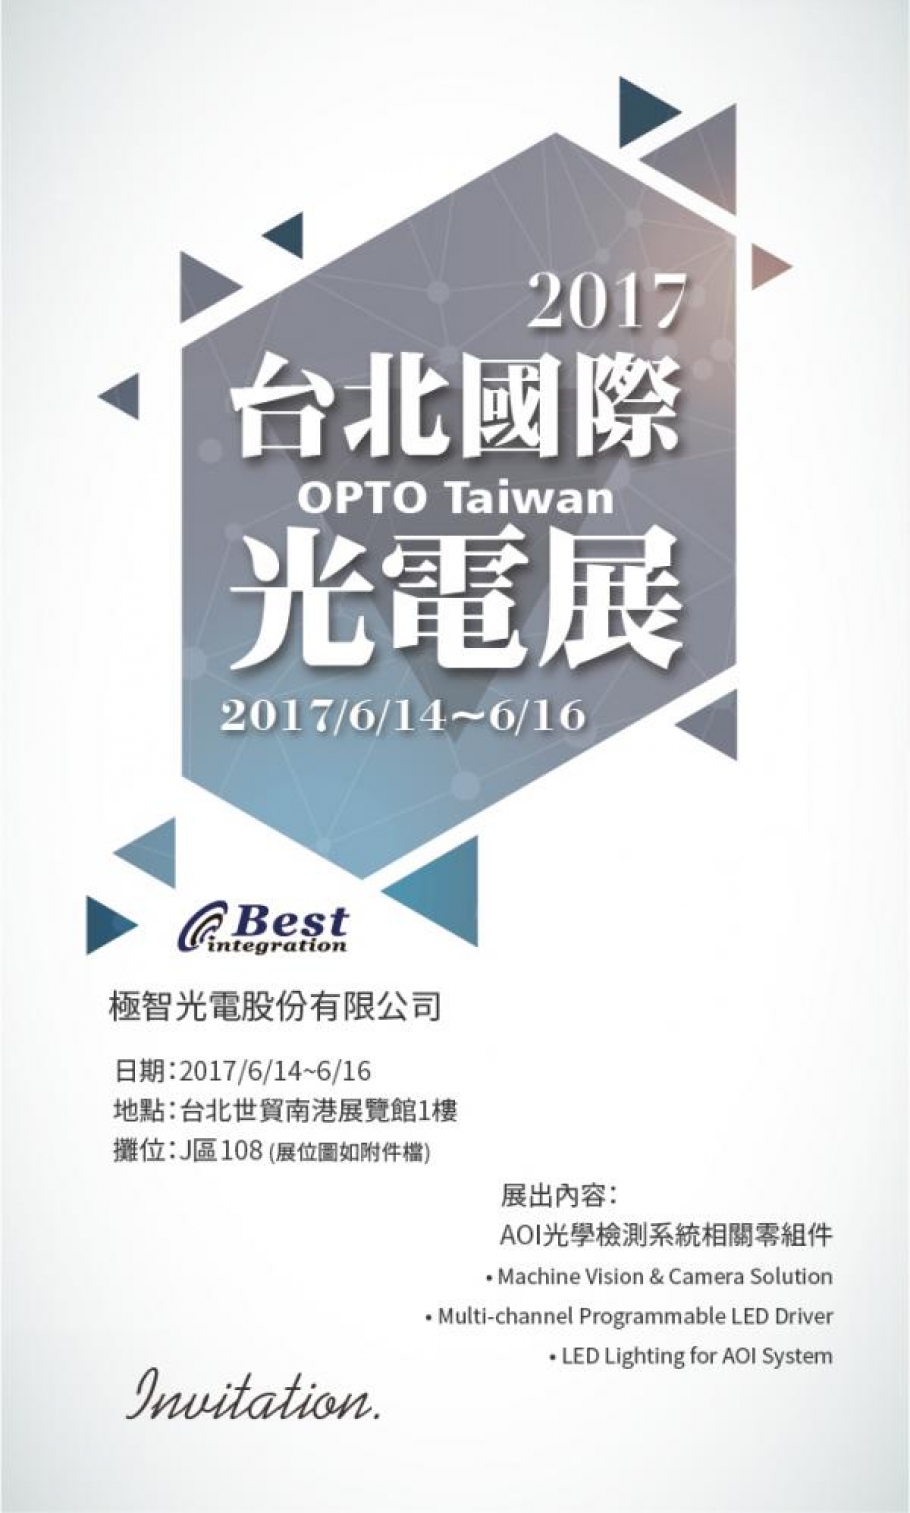 2017 OPTO TAIWAN INVITATION